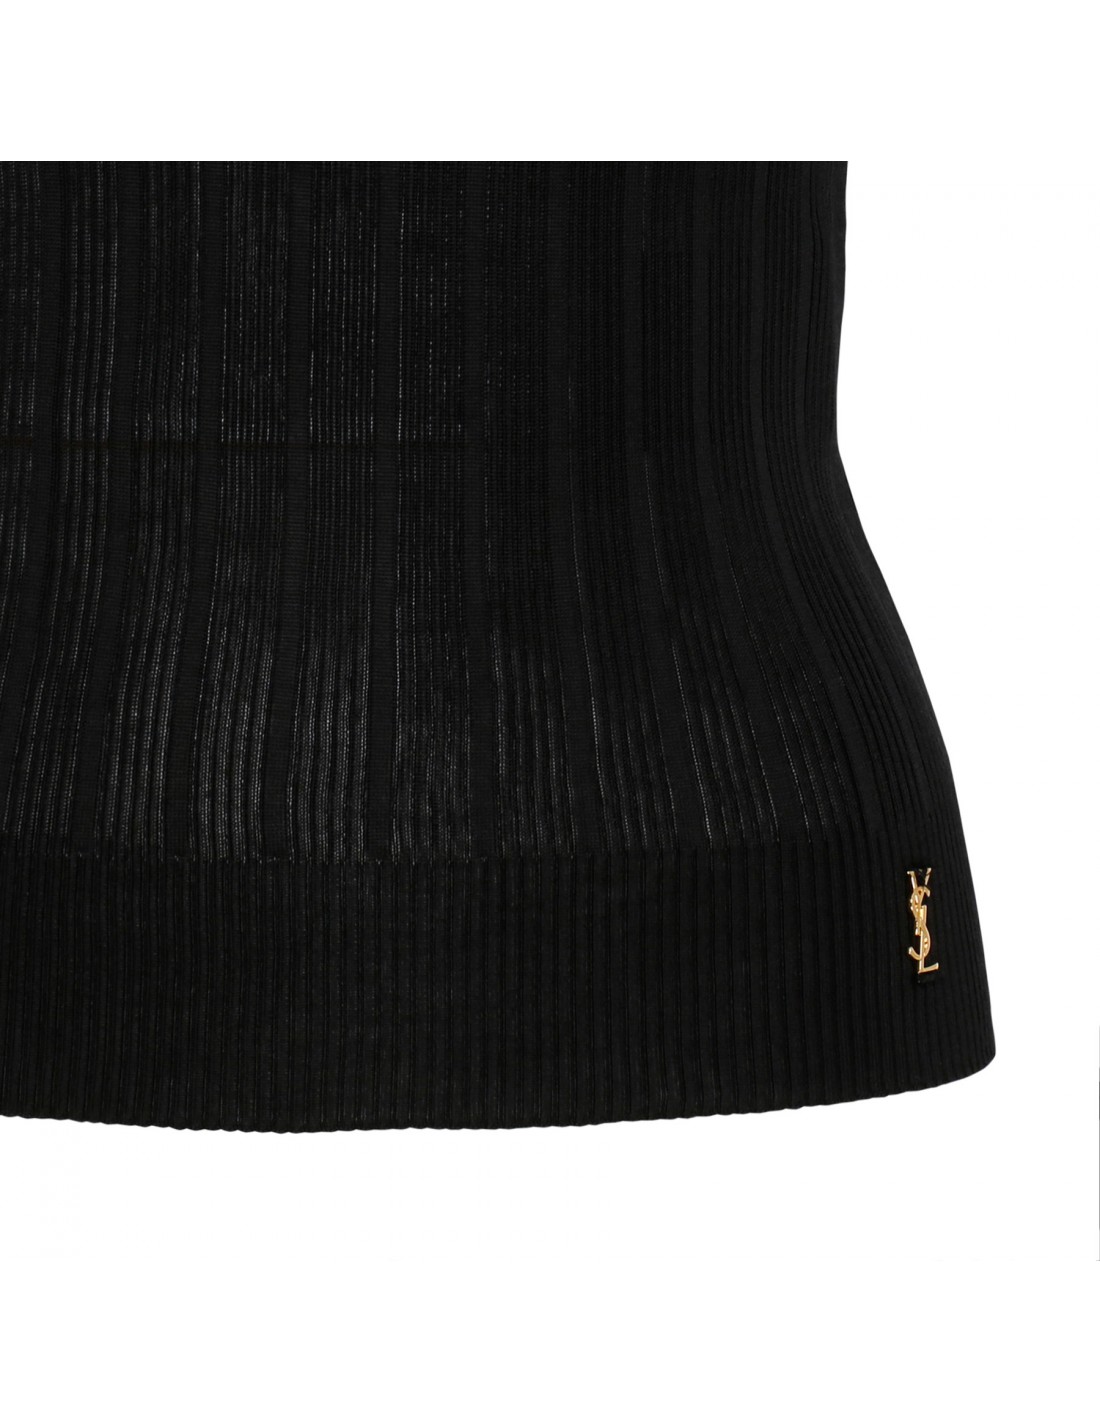 Black ribbed knit top